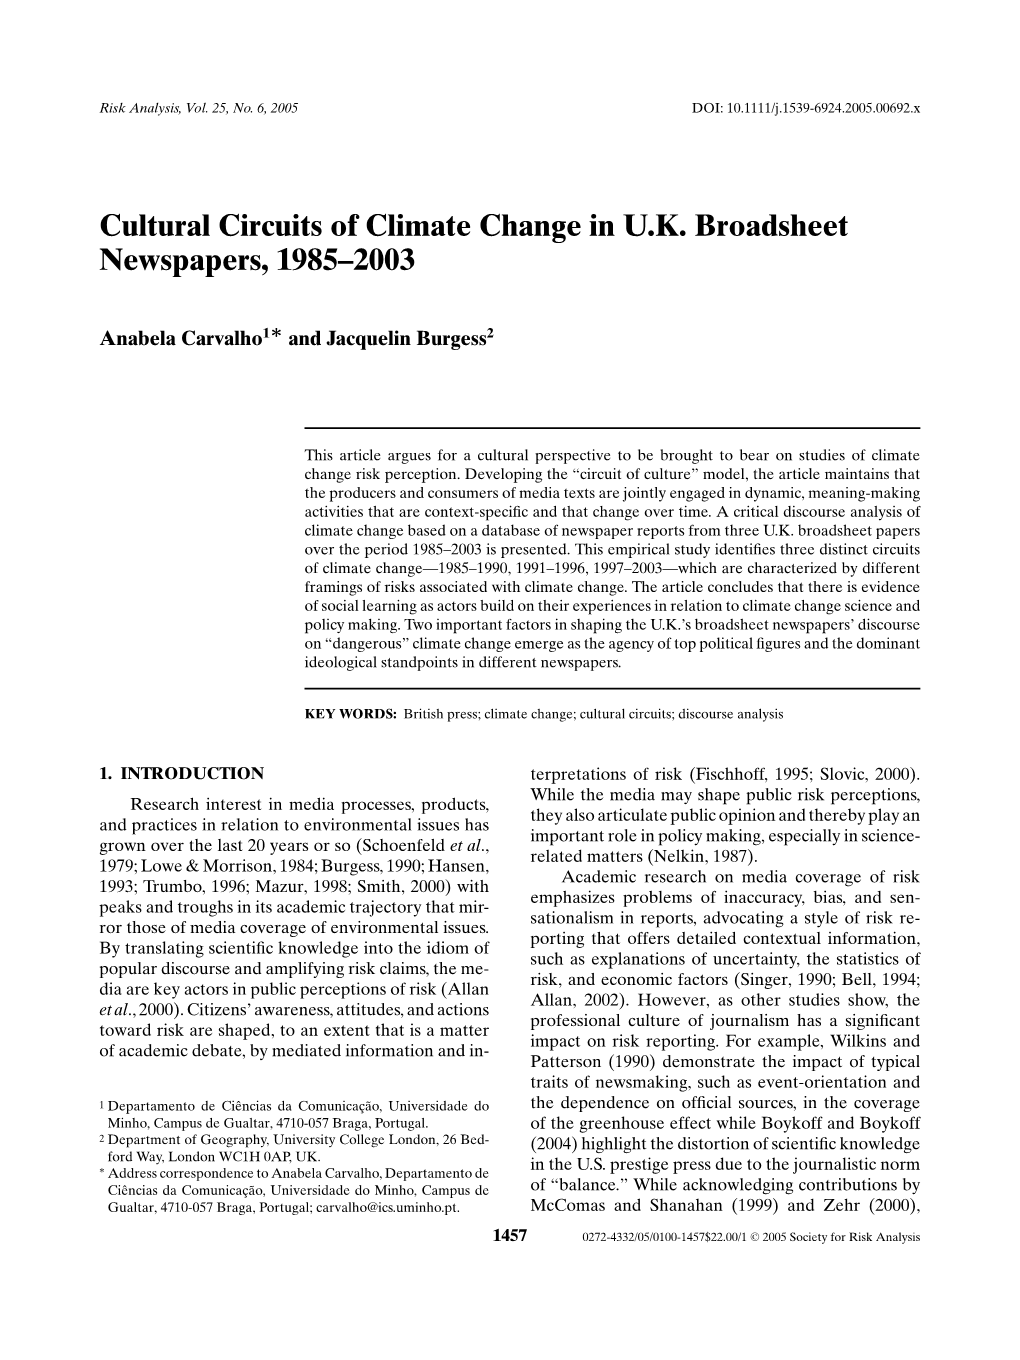 Cultural Circuits of Climate Change in U.K. Broadsheet Newspapers, 1985–2003